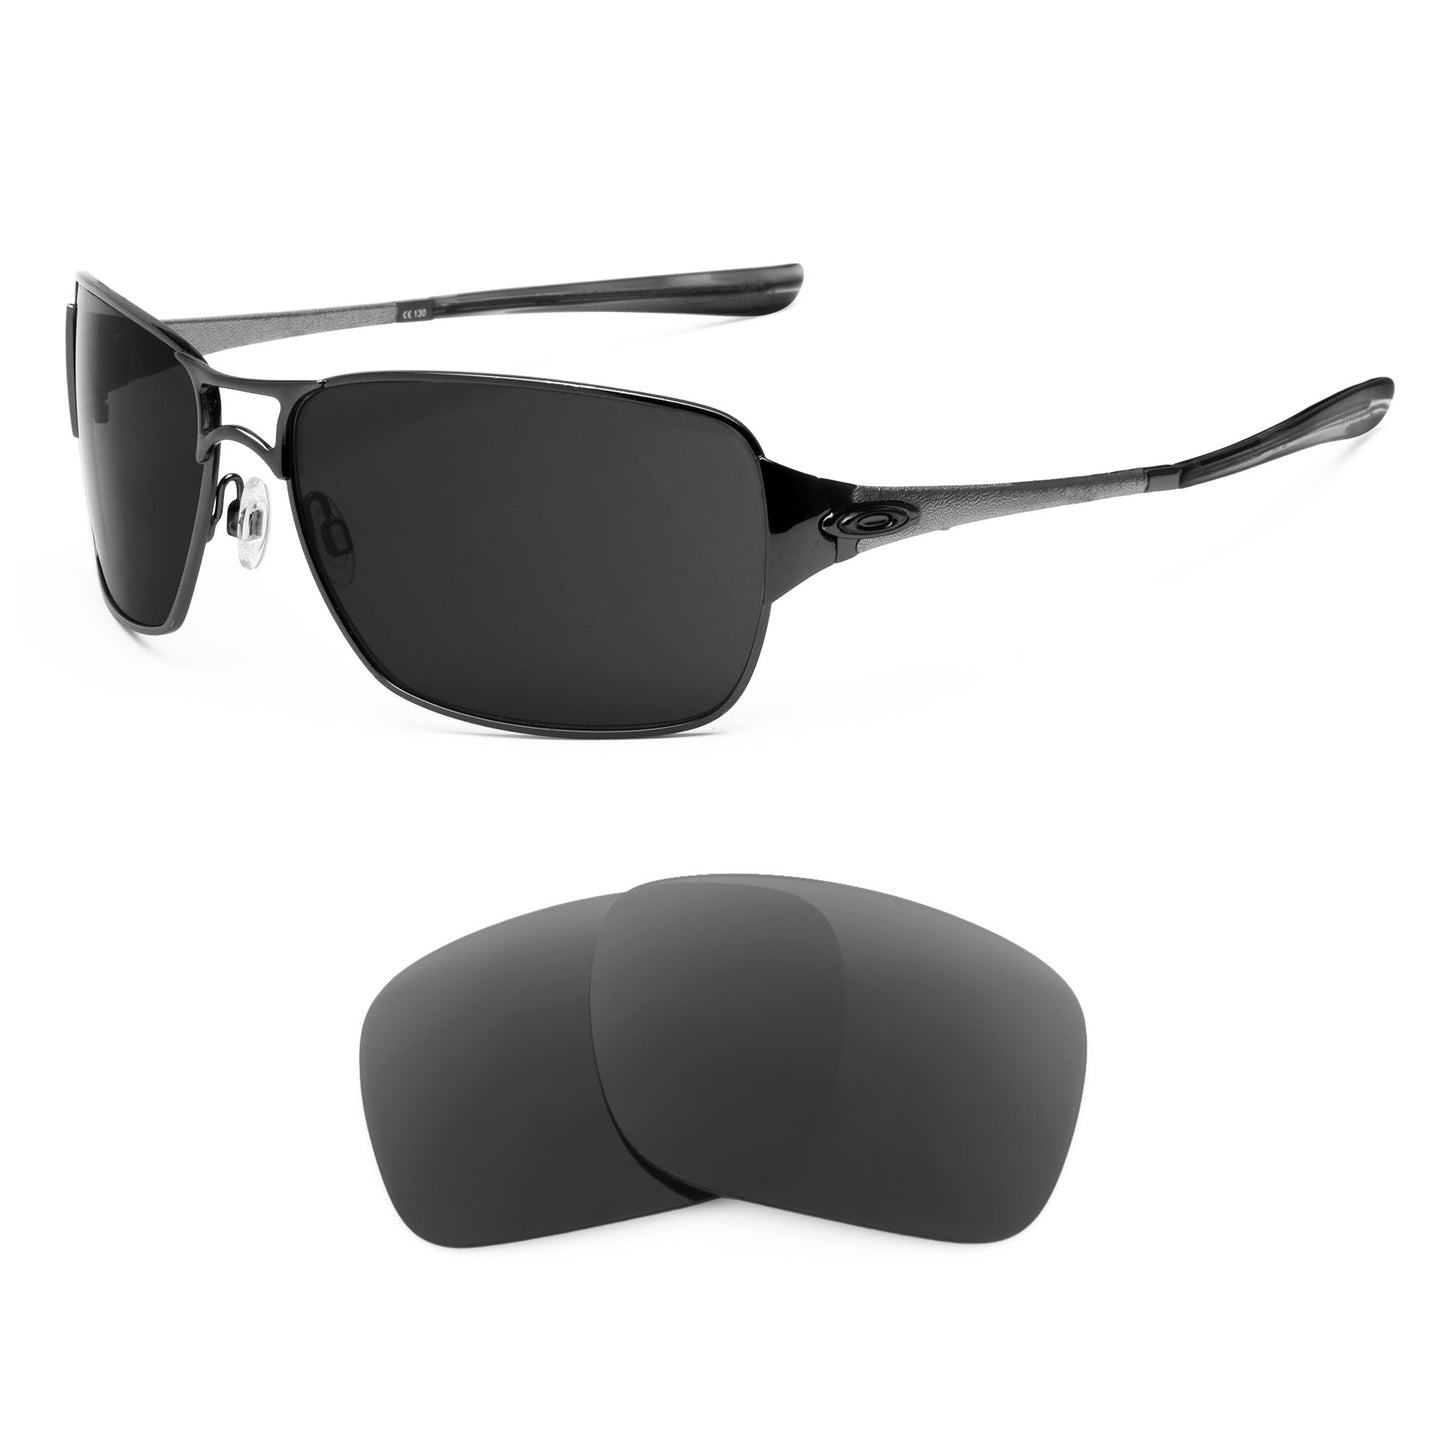 Oakley Impatient sunglasses with replacement lenses